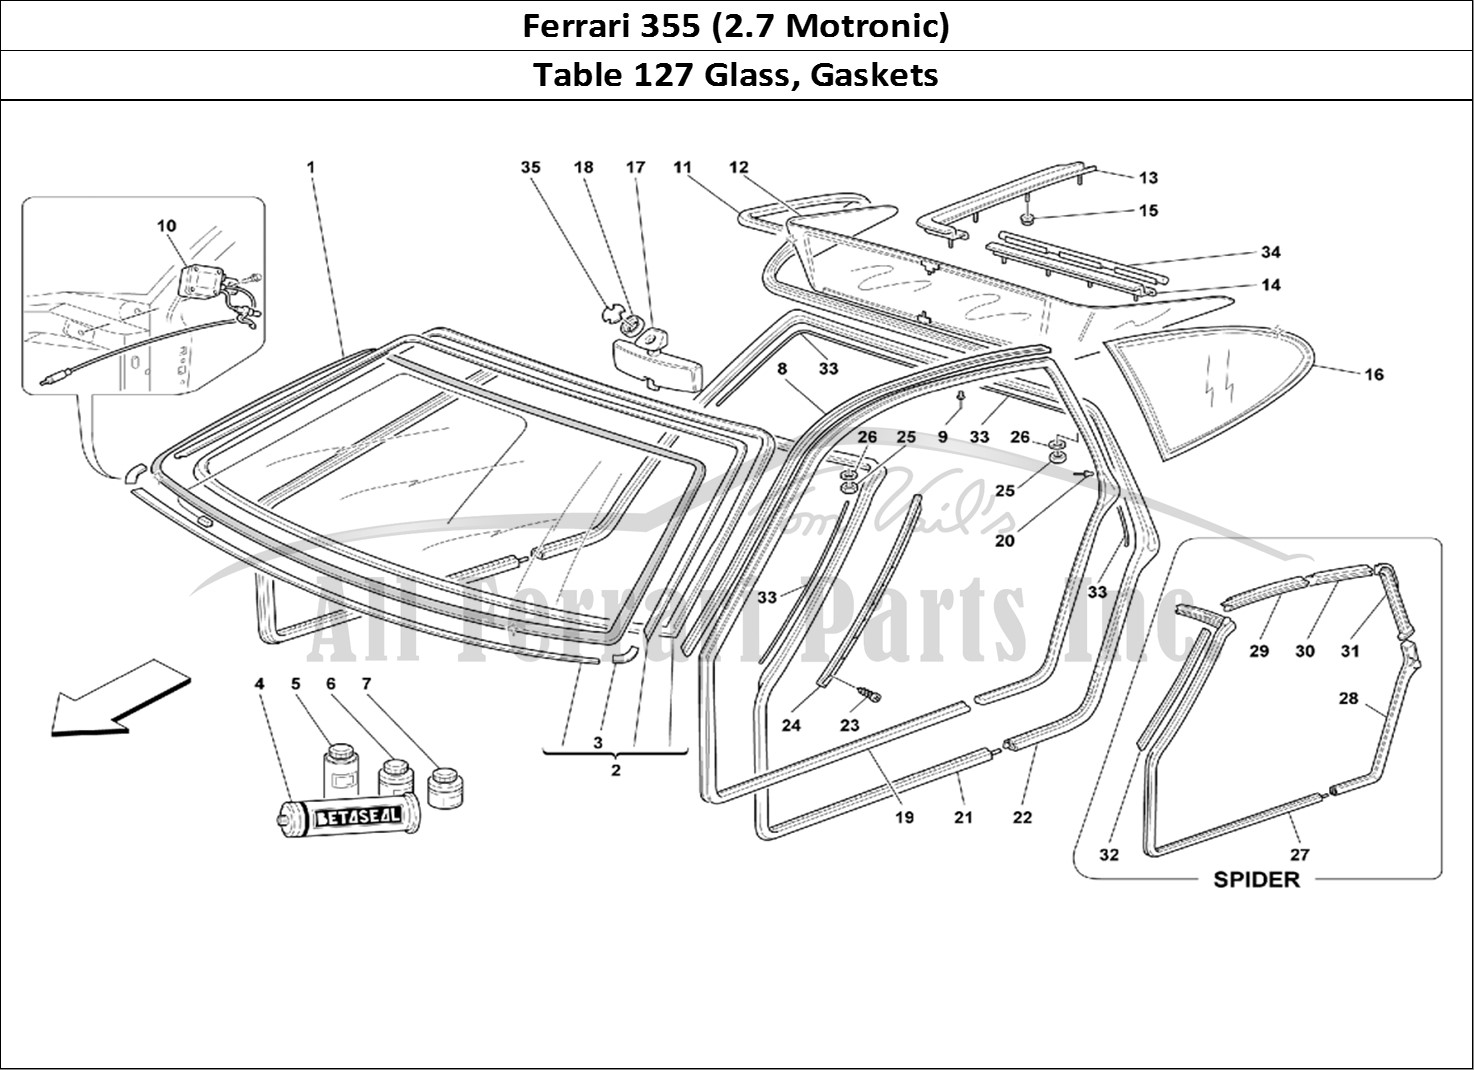 Ferrari Parts Ferrari 355 (2.7 Motronic) Page 127 Glasses and Gaskets